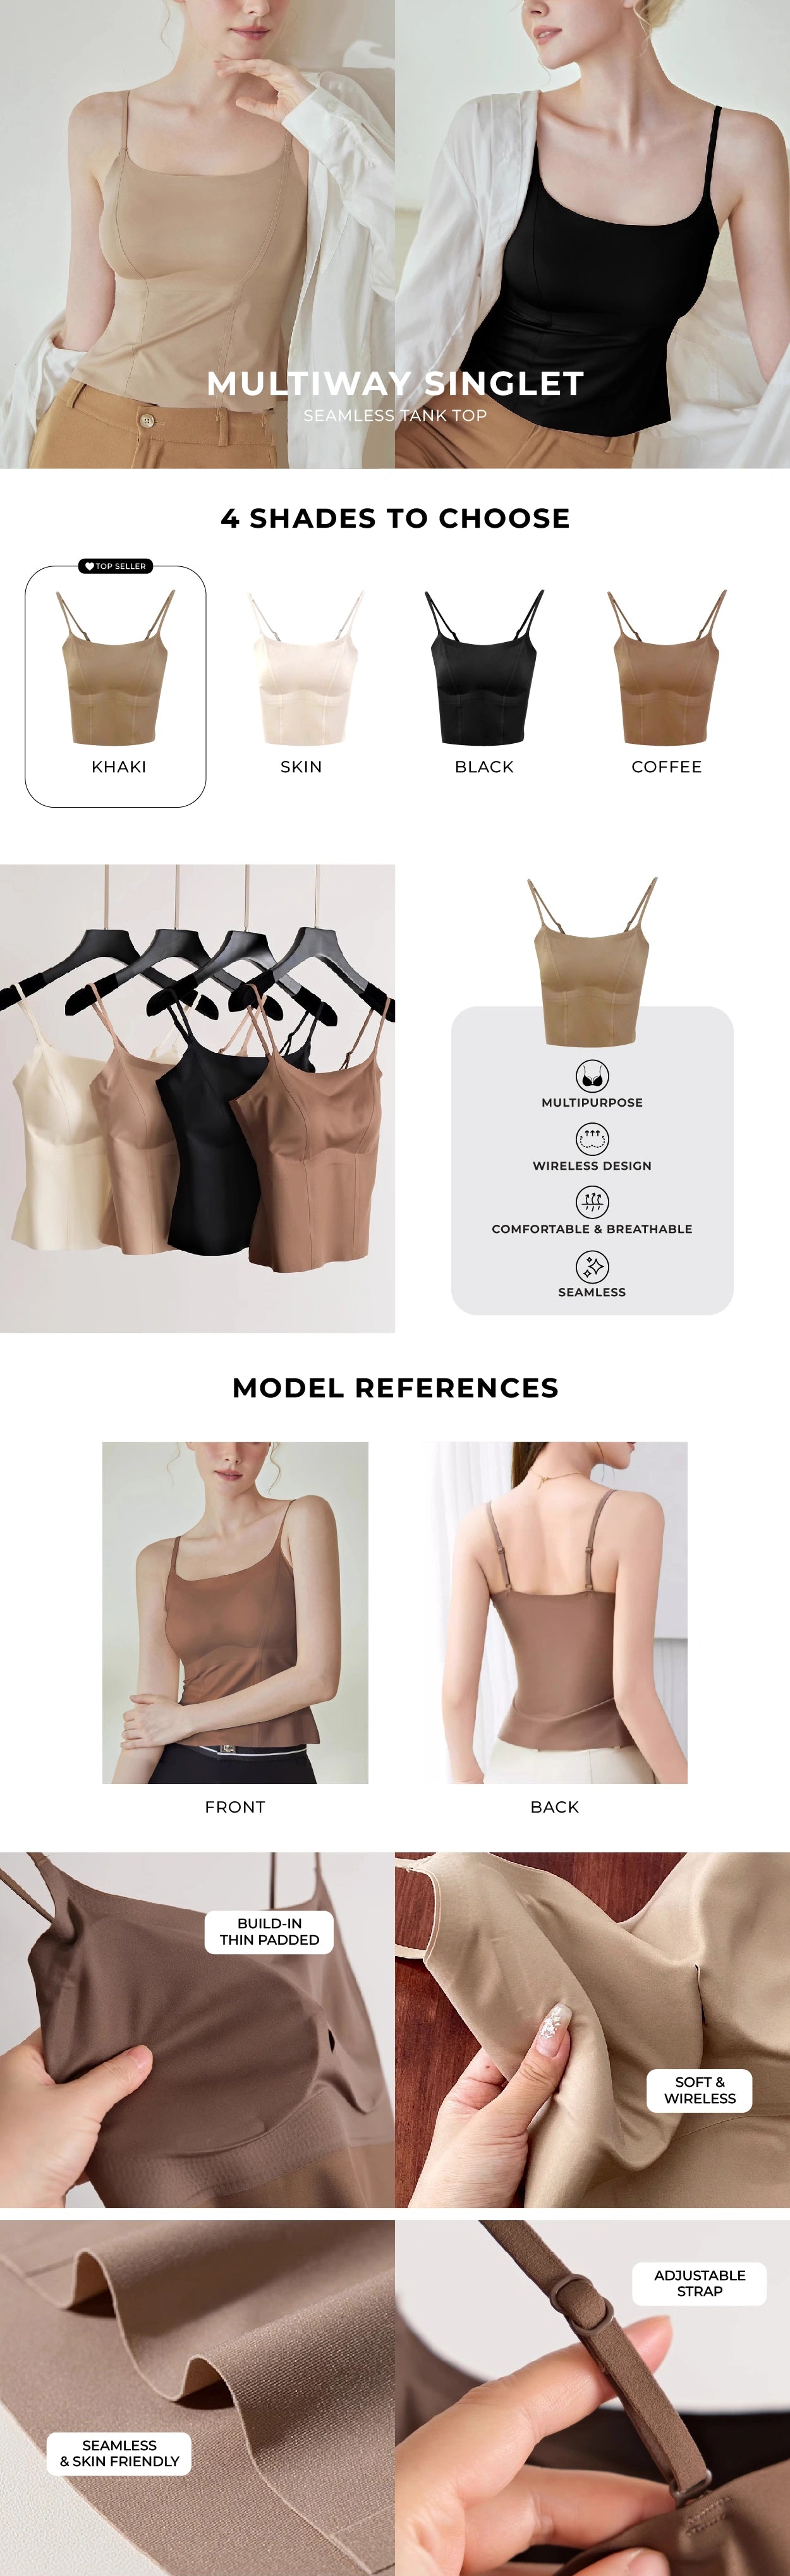 Product Description Long Image of Sleek Comfort Bra Tops from Chantelle's Secret